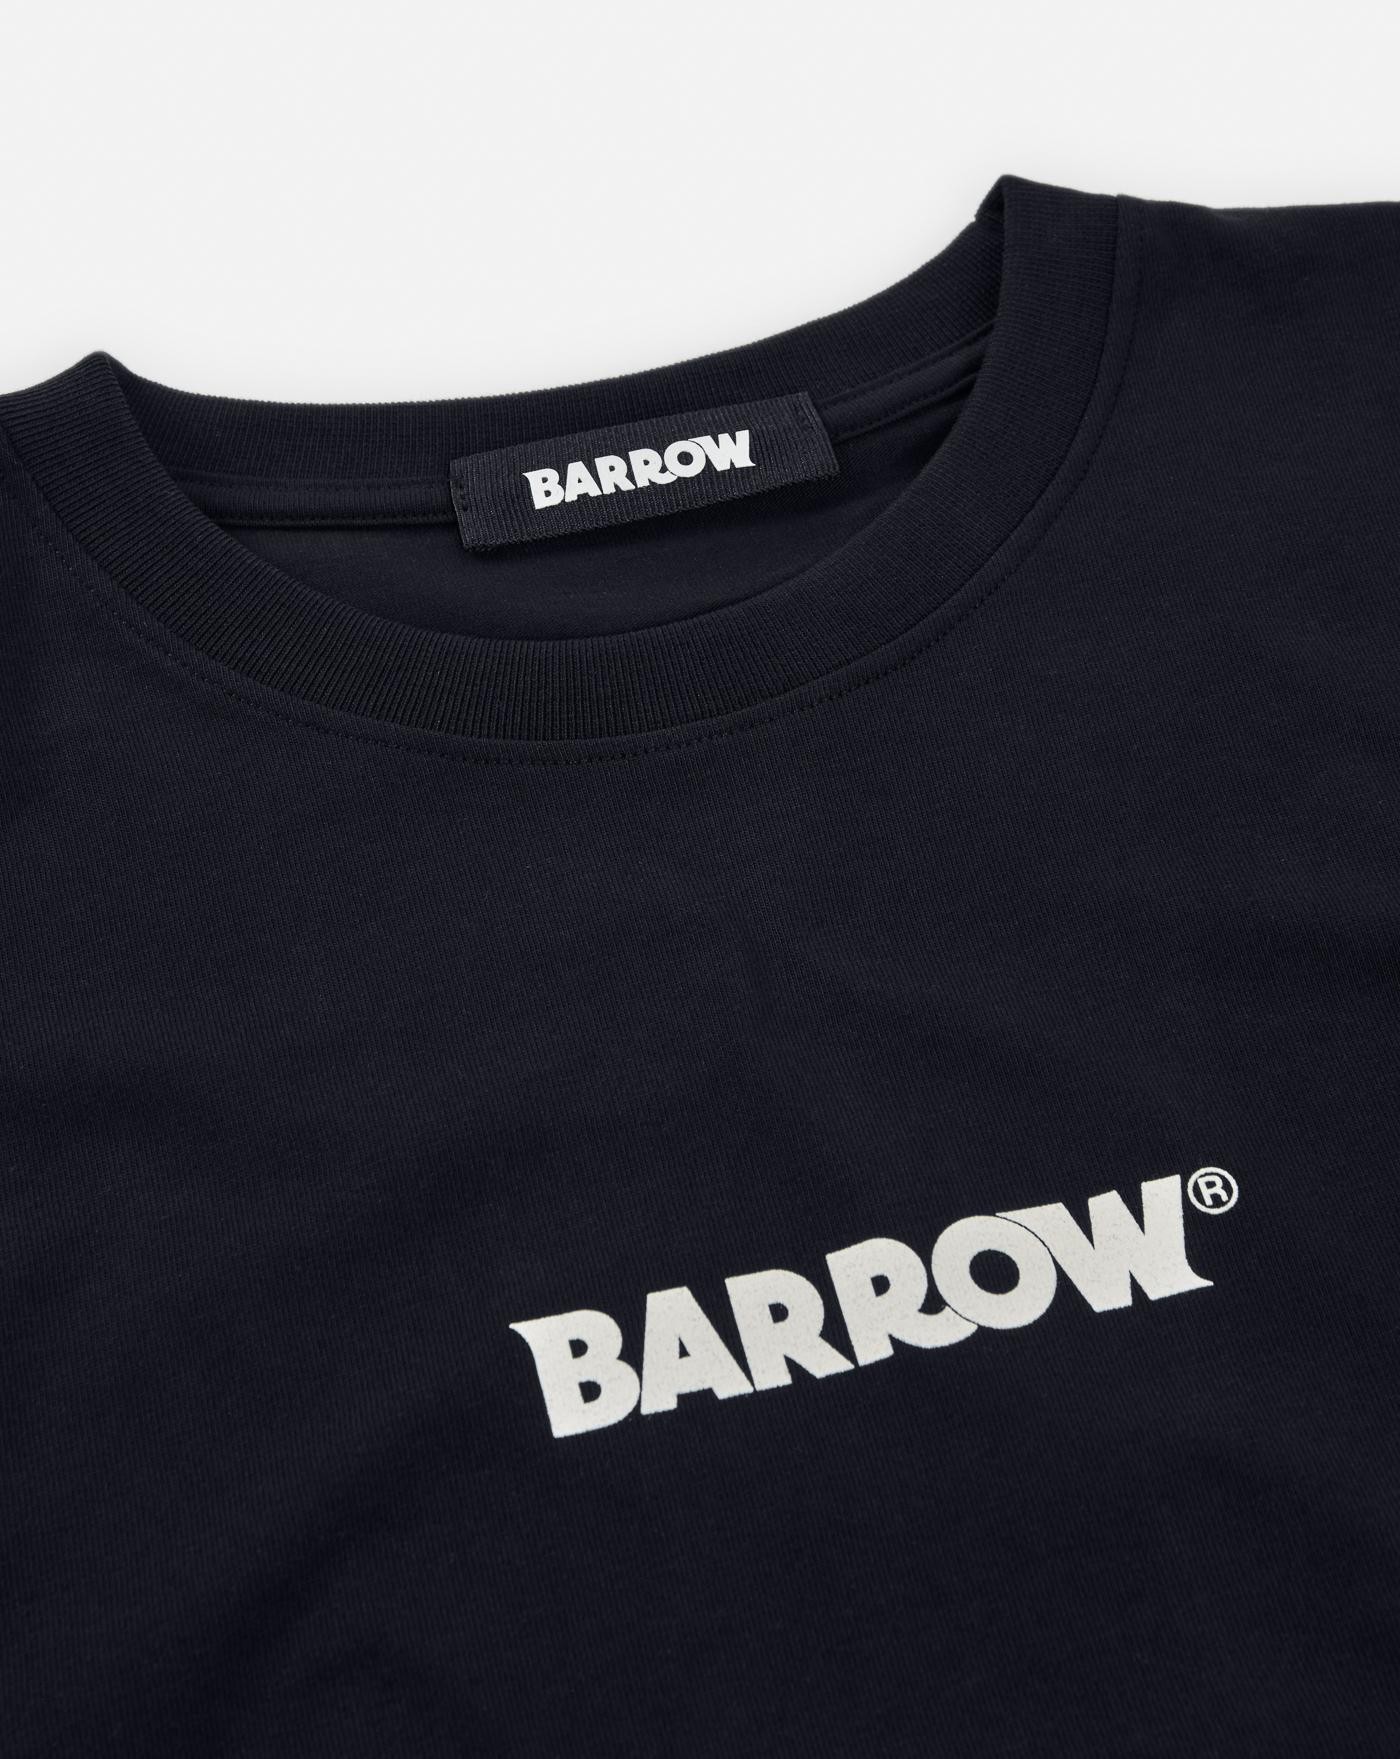 Camiseta Barrow Smiley 2